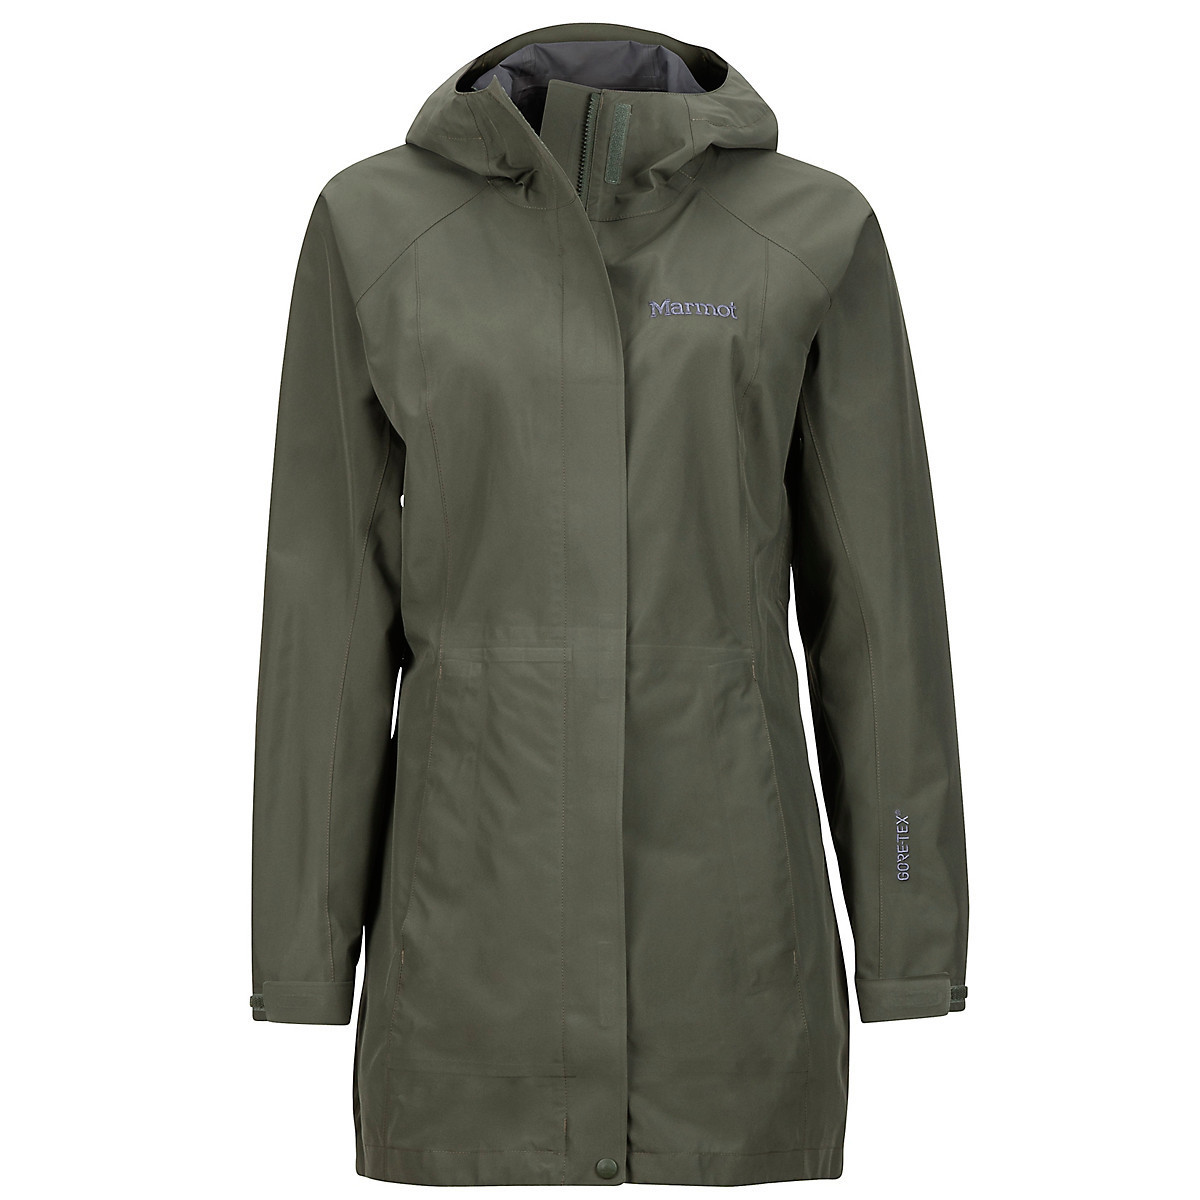 Marmot Women's Essential Jacket - Green, XL